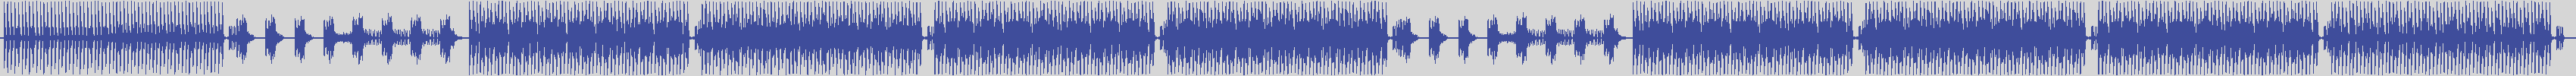 atomic_recordings [AR012] Frankie Fontana - The Games [Original Mix] audio wave form